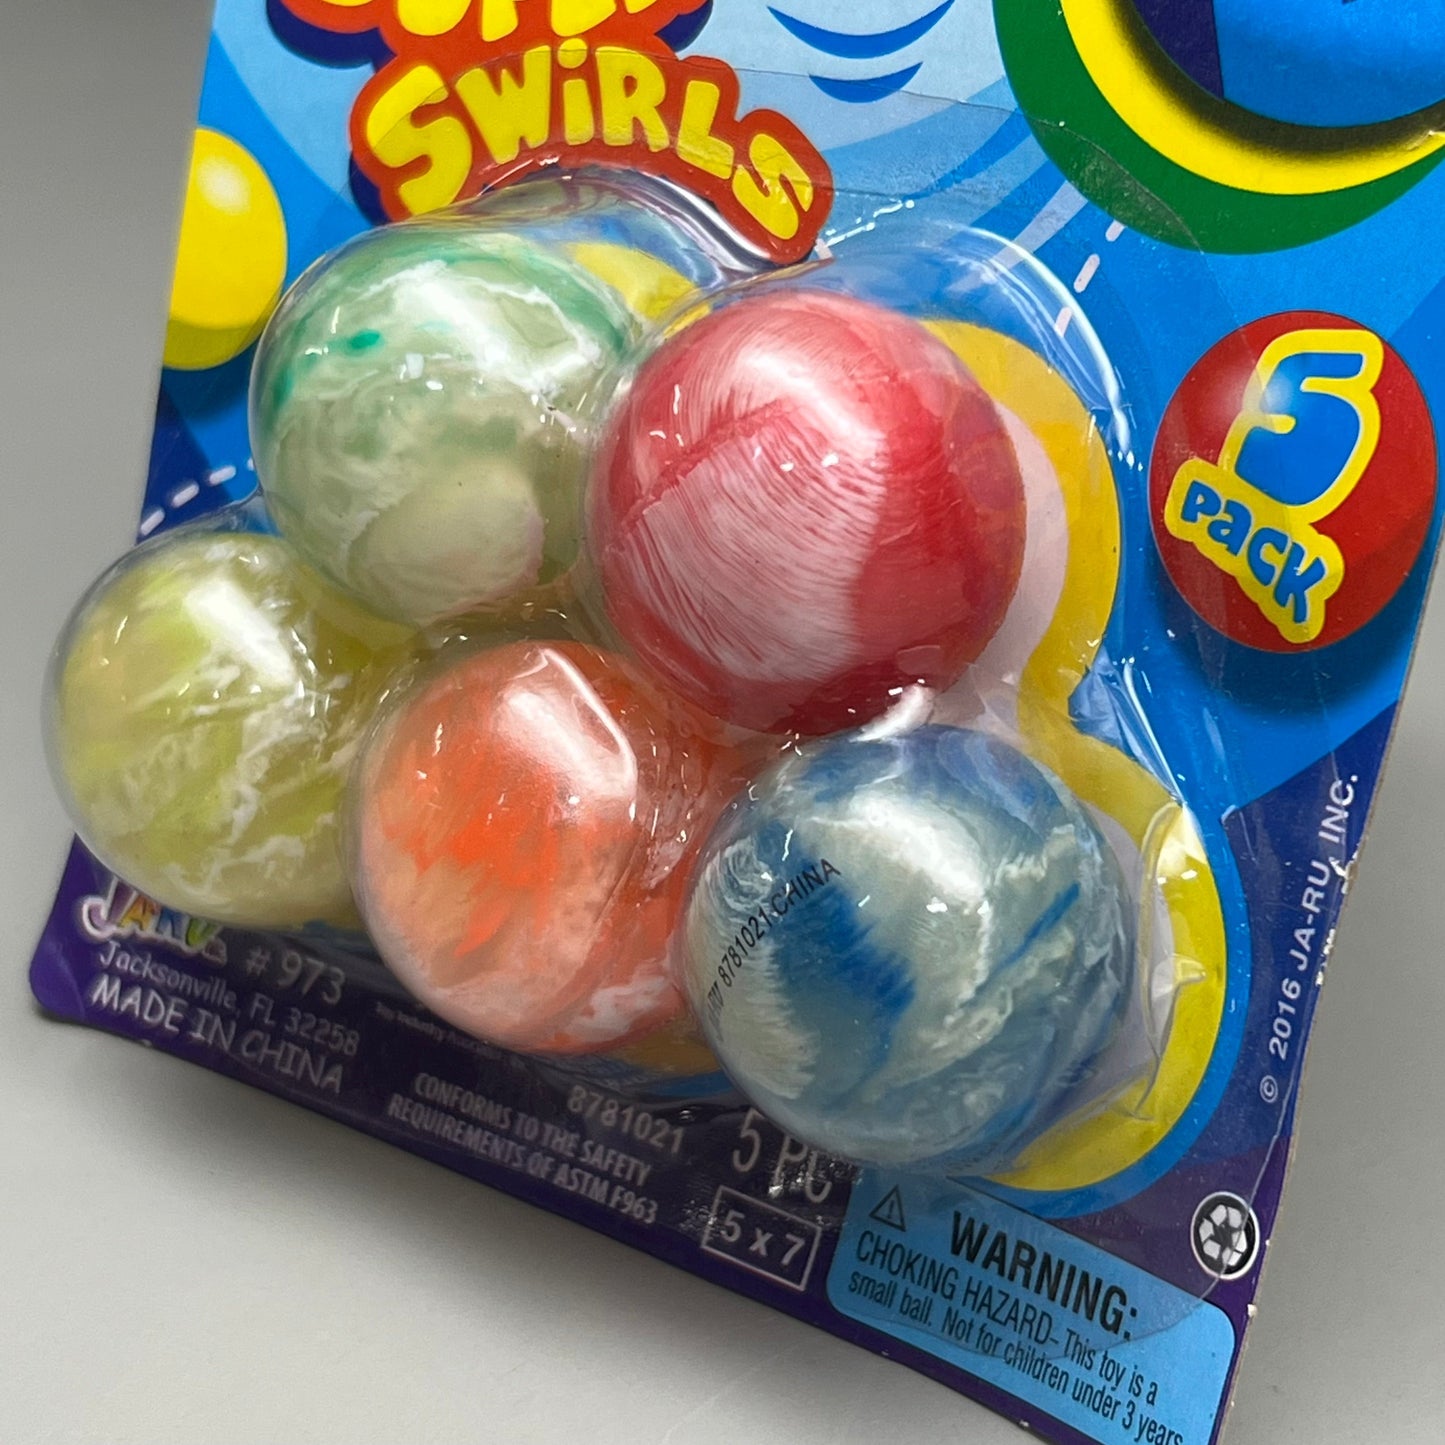 JA-RU Hi Bounce Super Swirls Bouncing Balls (4-PACK) of 5 Balls Per Package 973